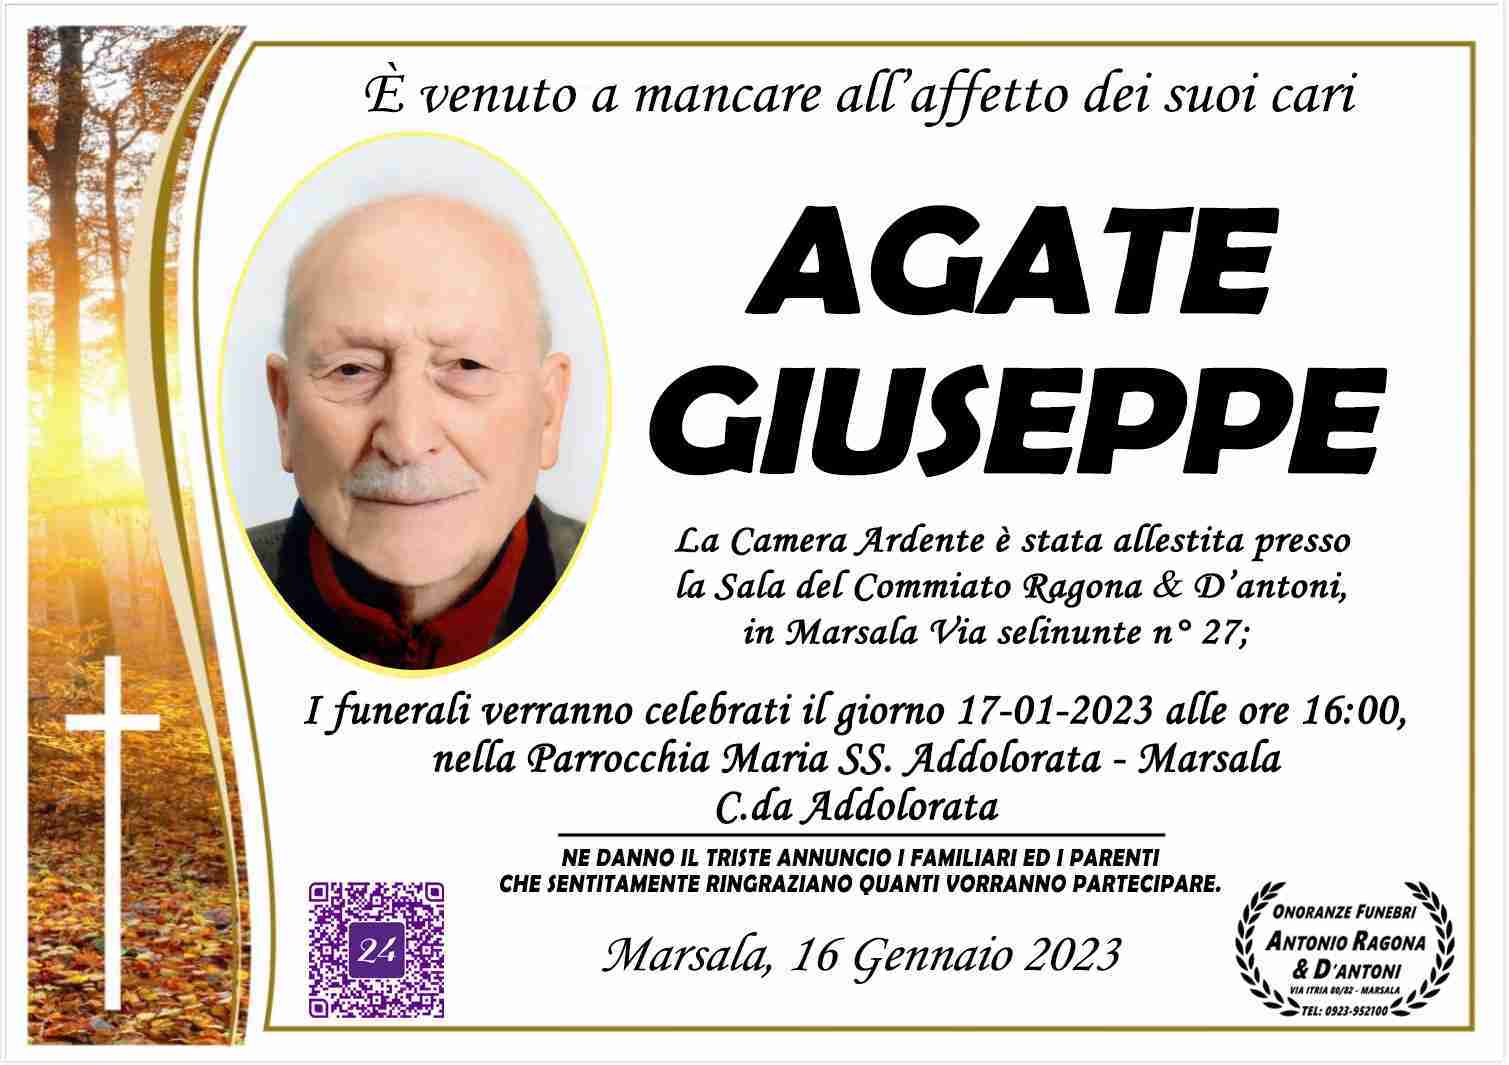 Giuseppe Agate